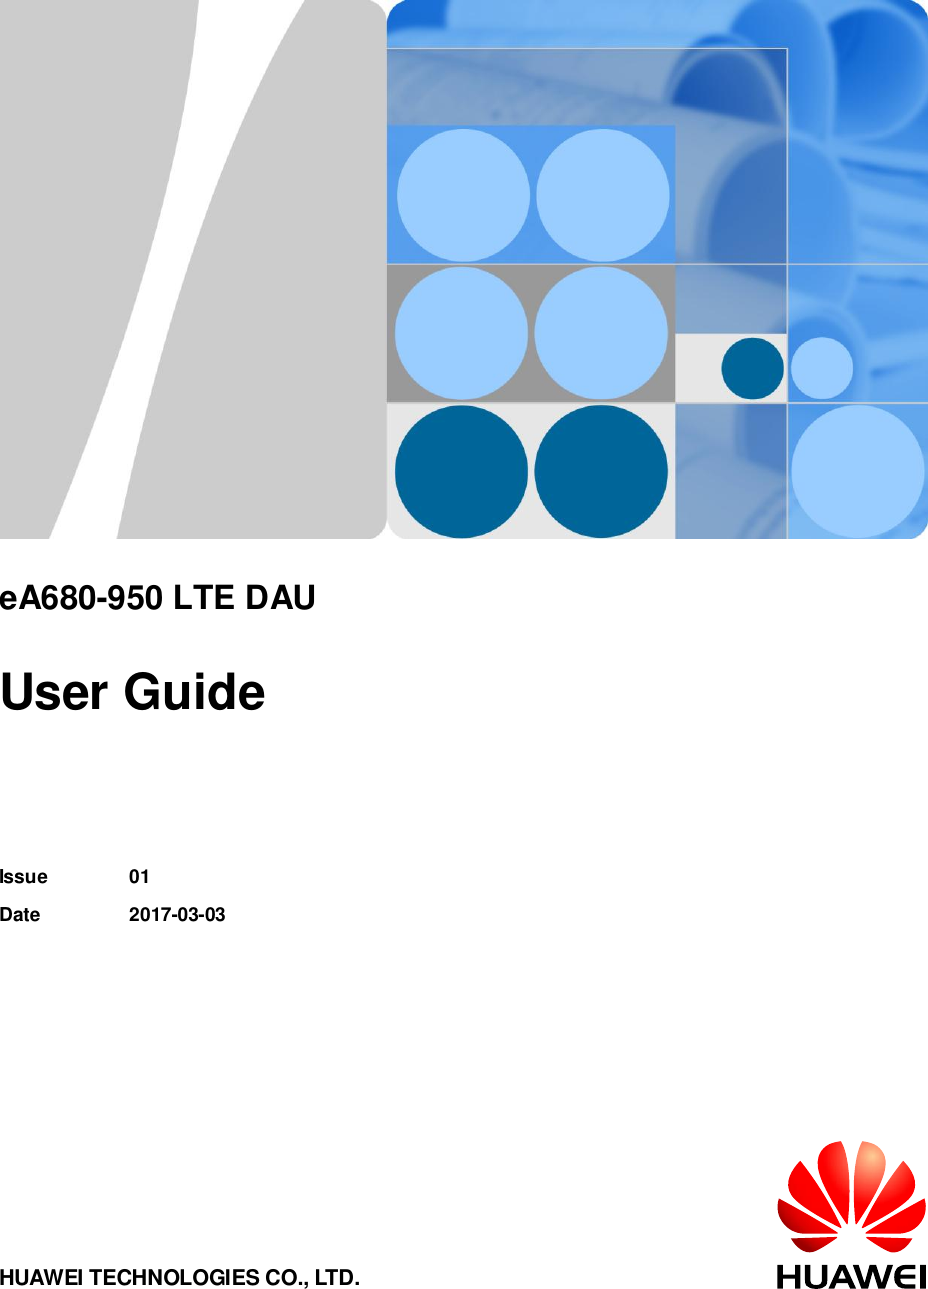         eA680-950 LTE DAU  User Guide   Issue 01 Date 2017-03-03 HUAWEI TECHNOLOGIES CO., LTD. 